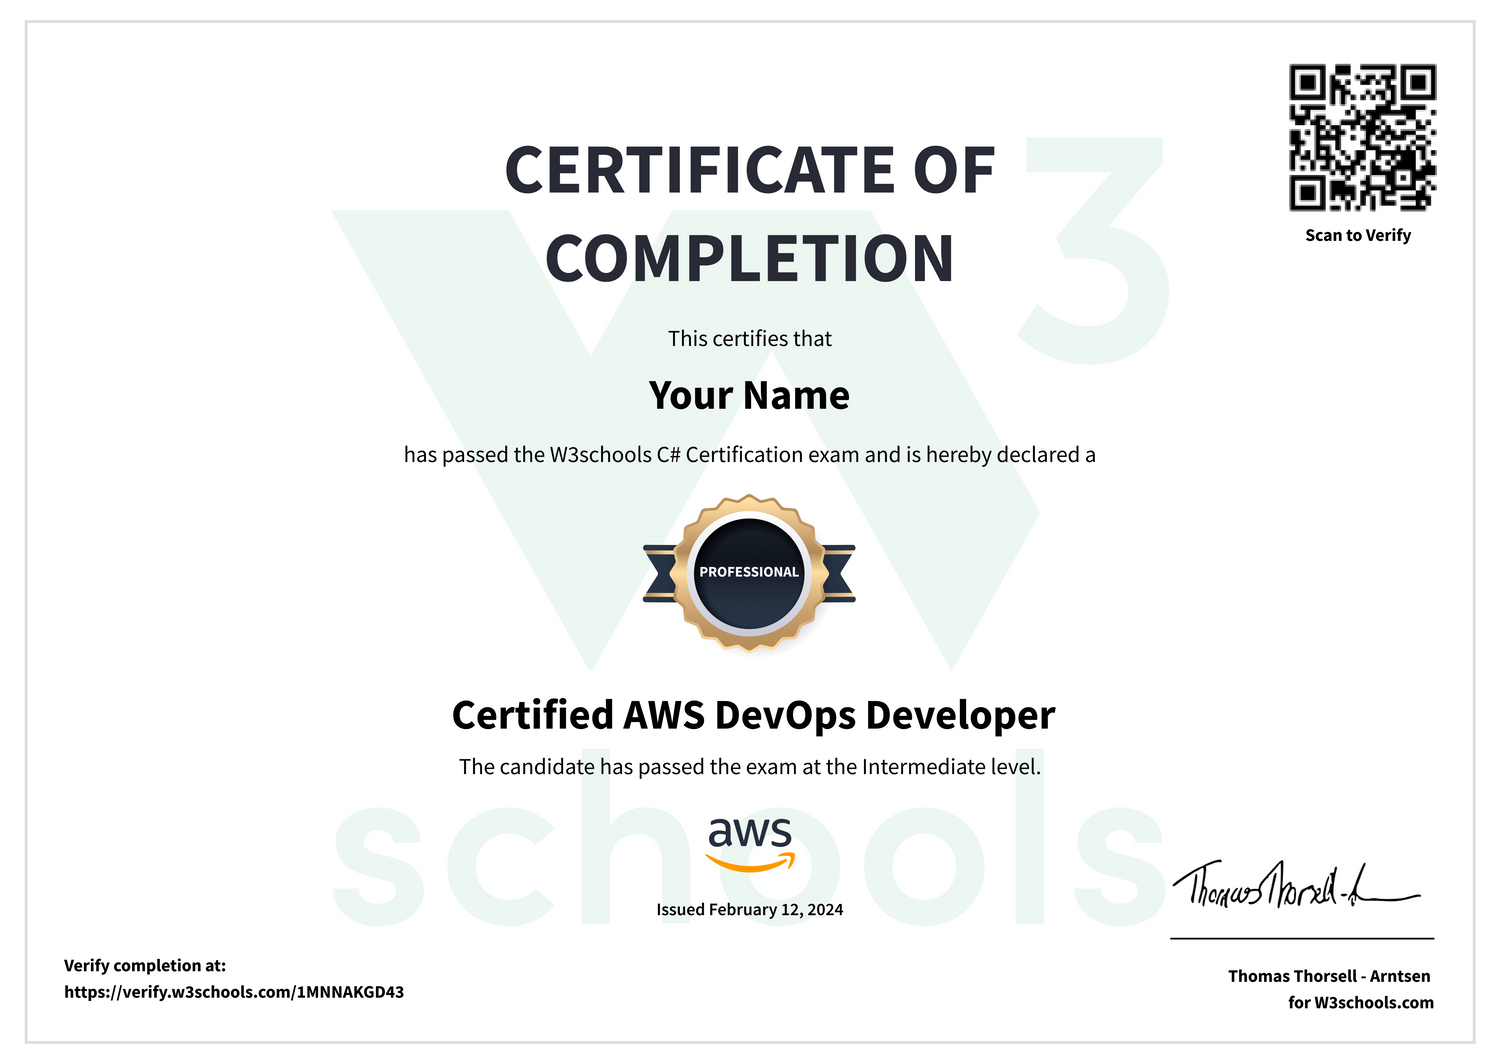 Benefits of AWS DevOps Certificate: